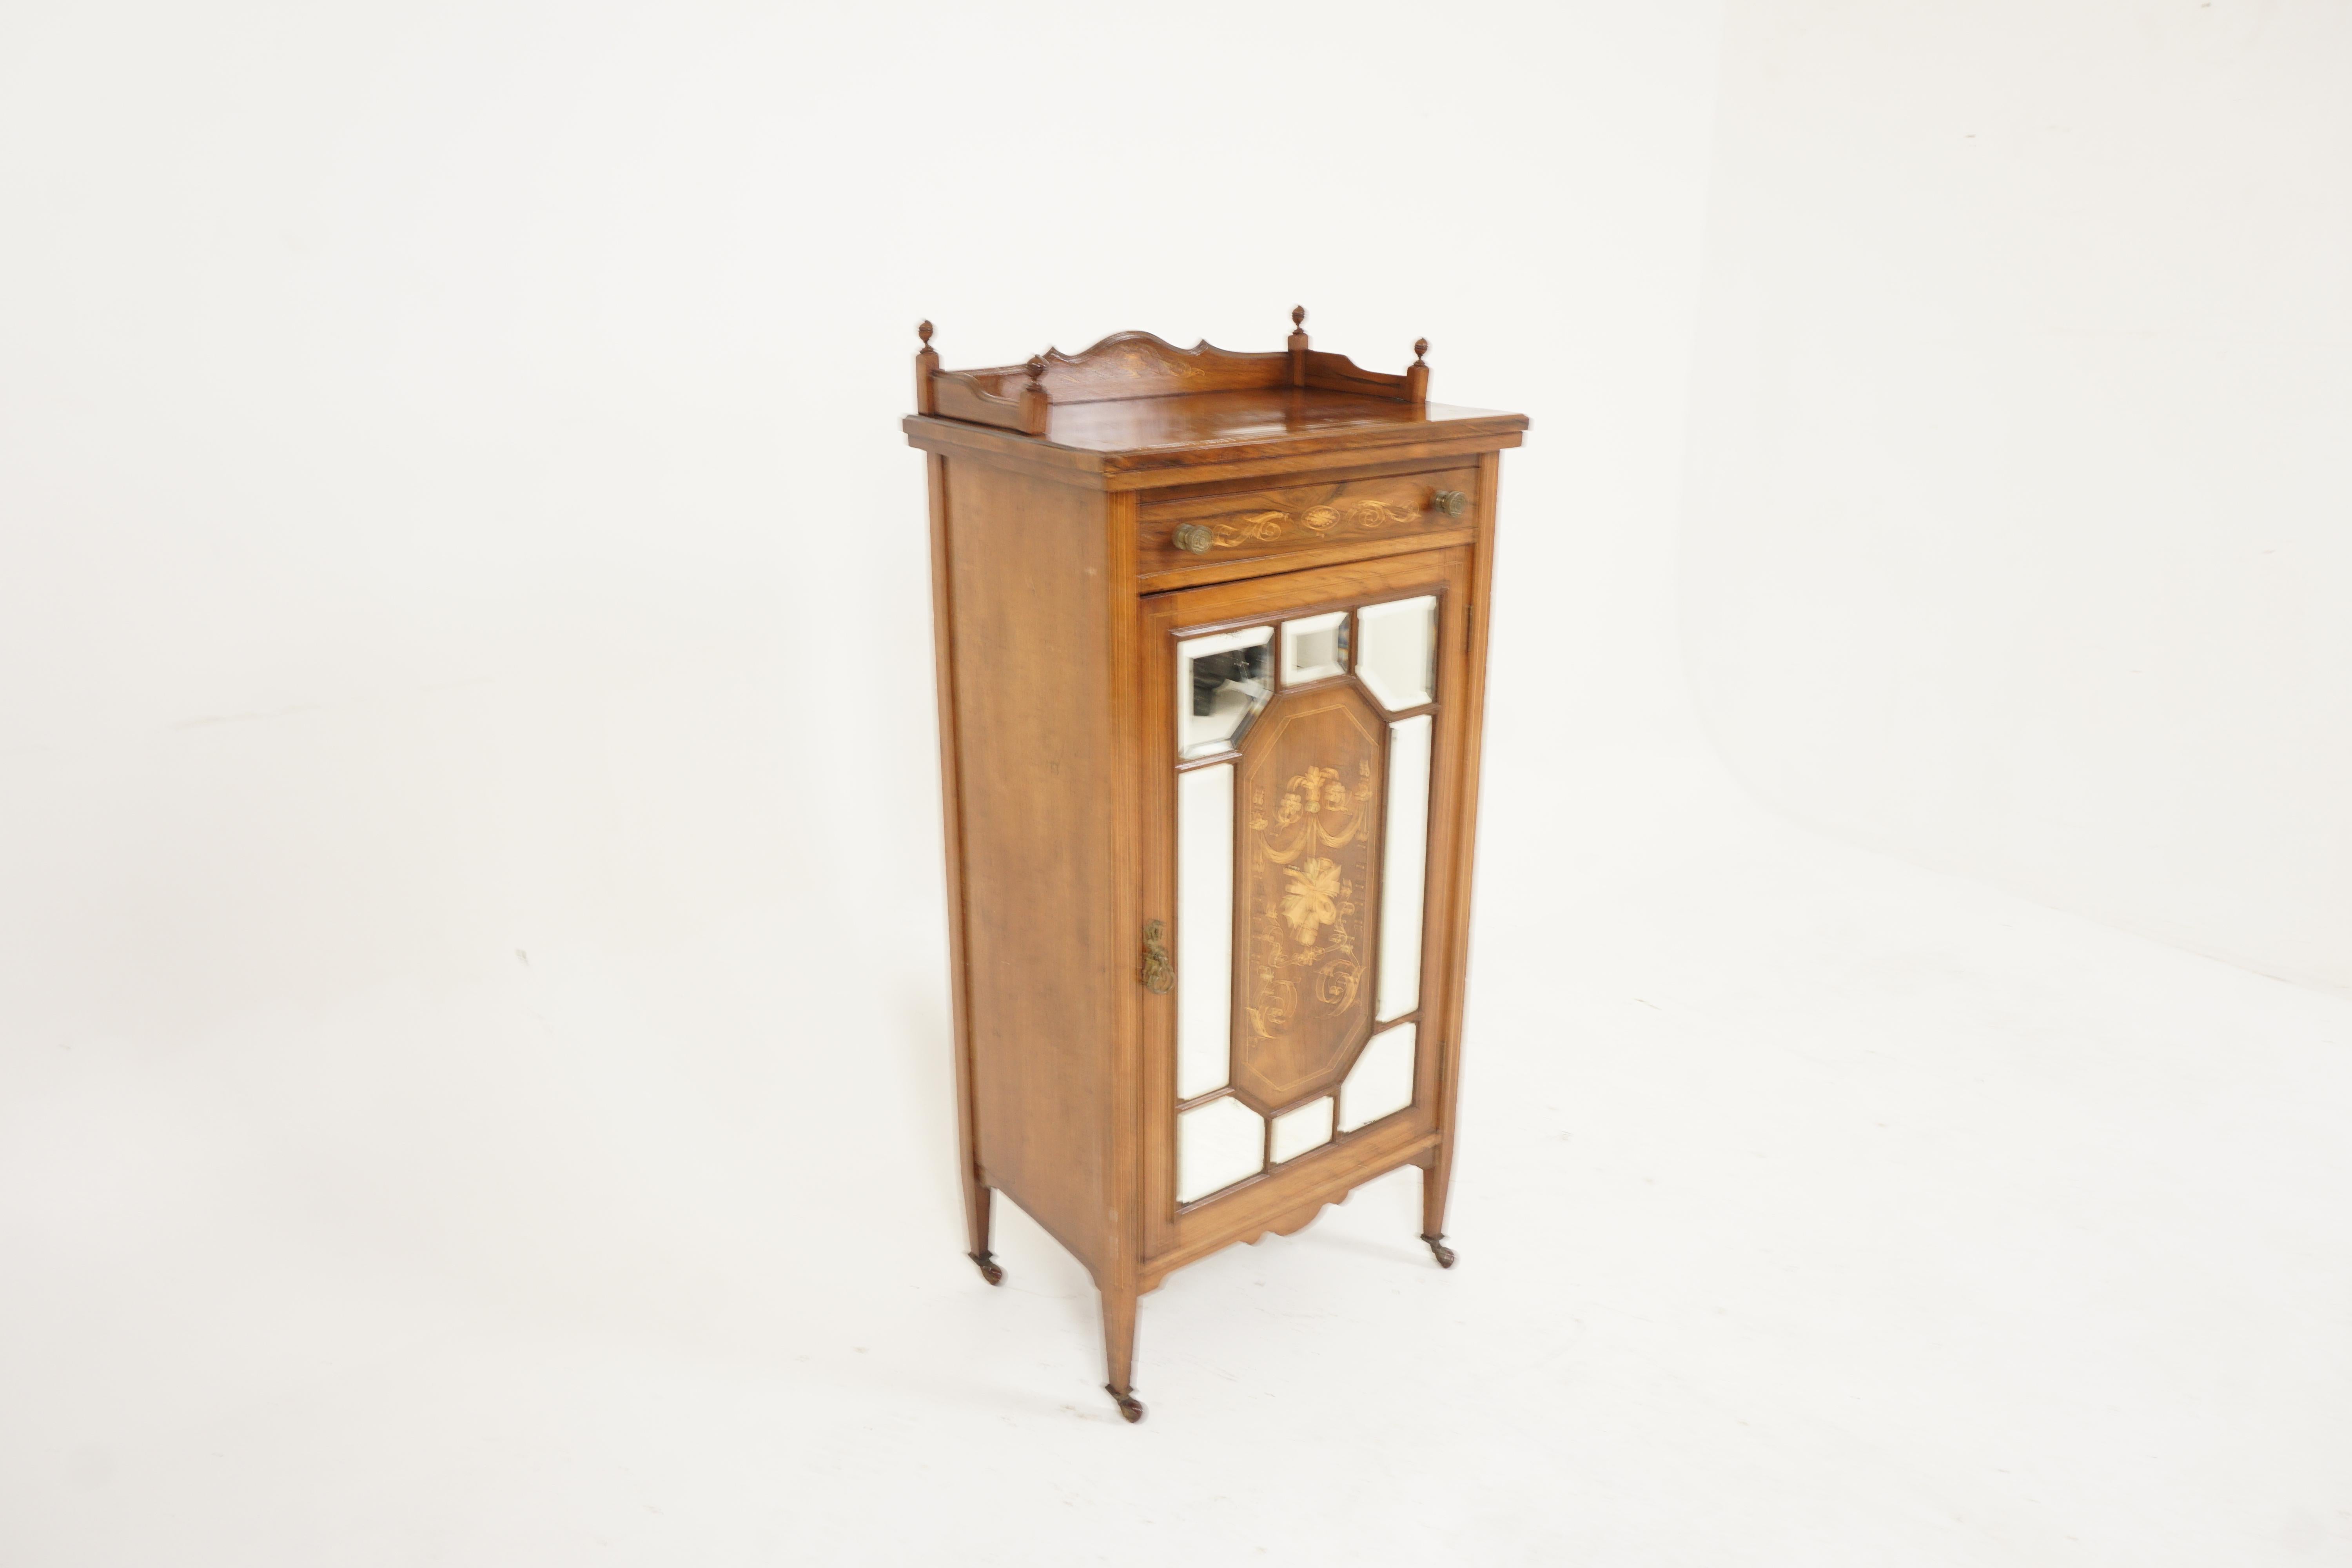 Scottish Antique Edwardian Inlaid Music Cabinet, Display Cabinet, Scotland 1900, H614